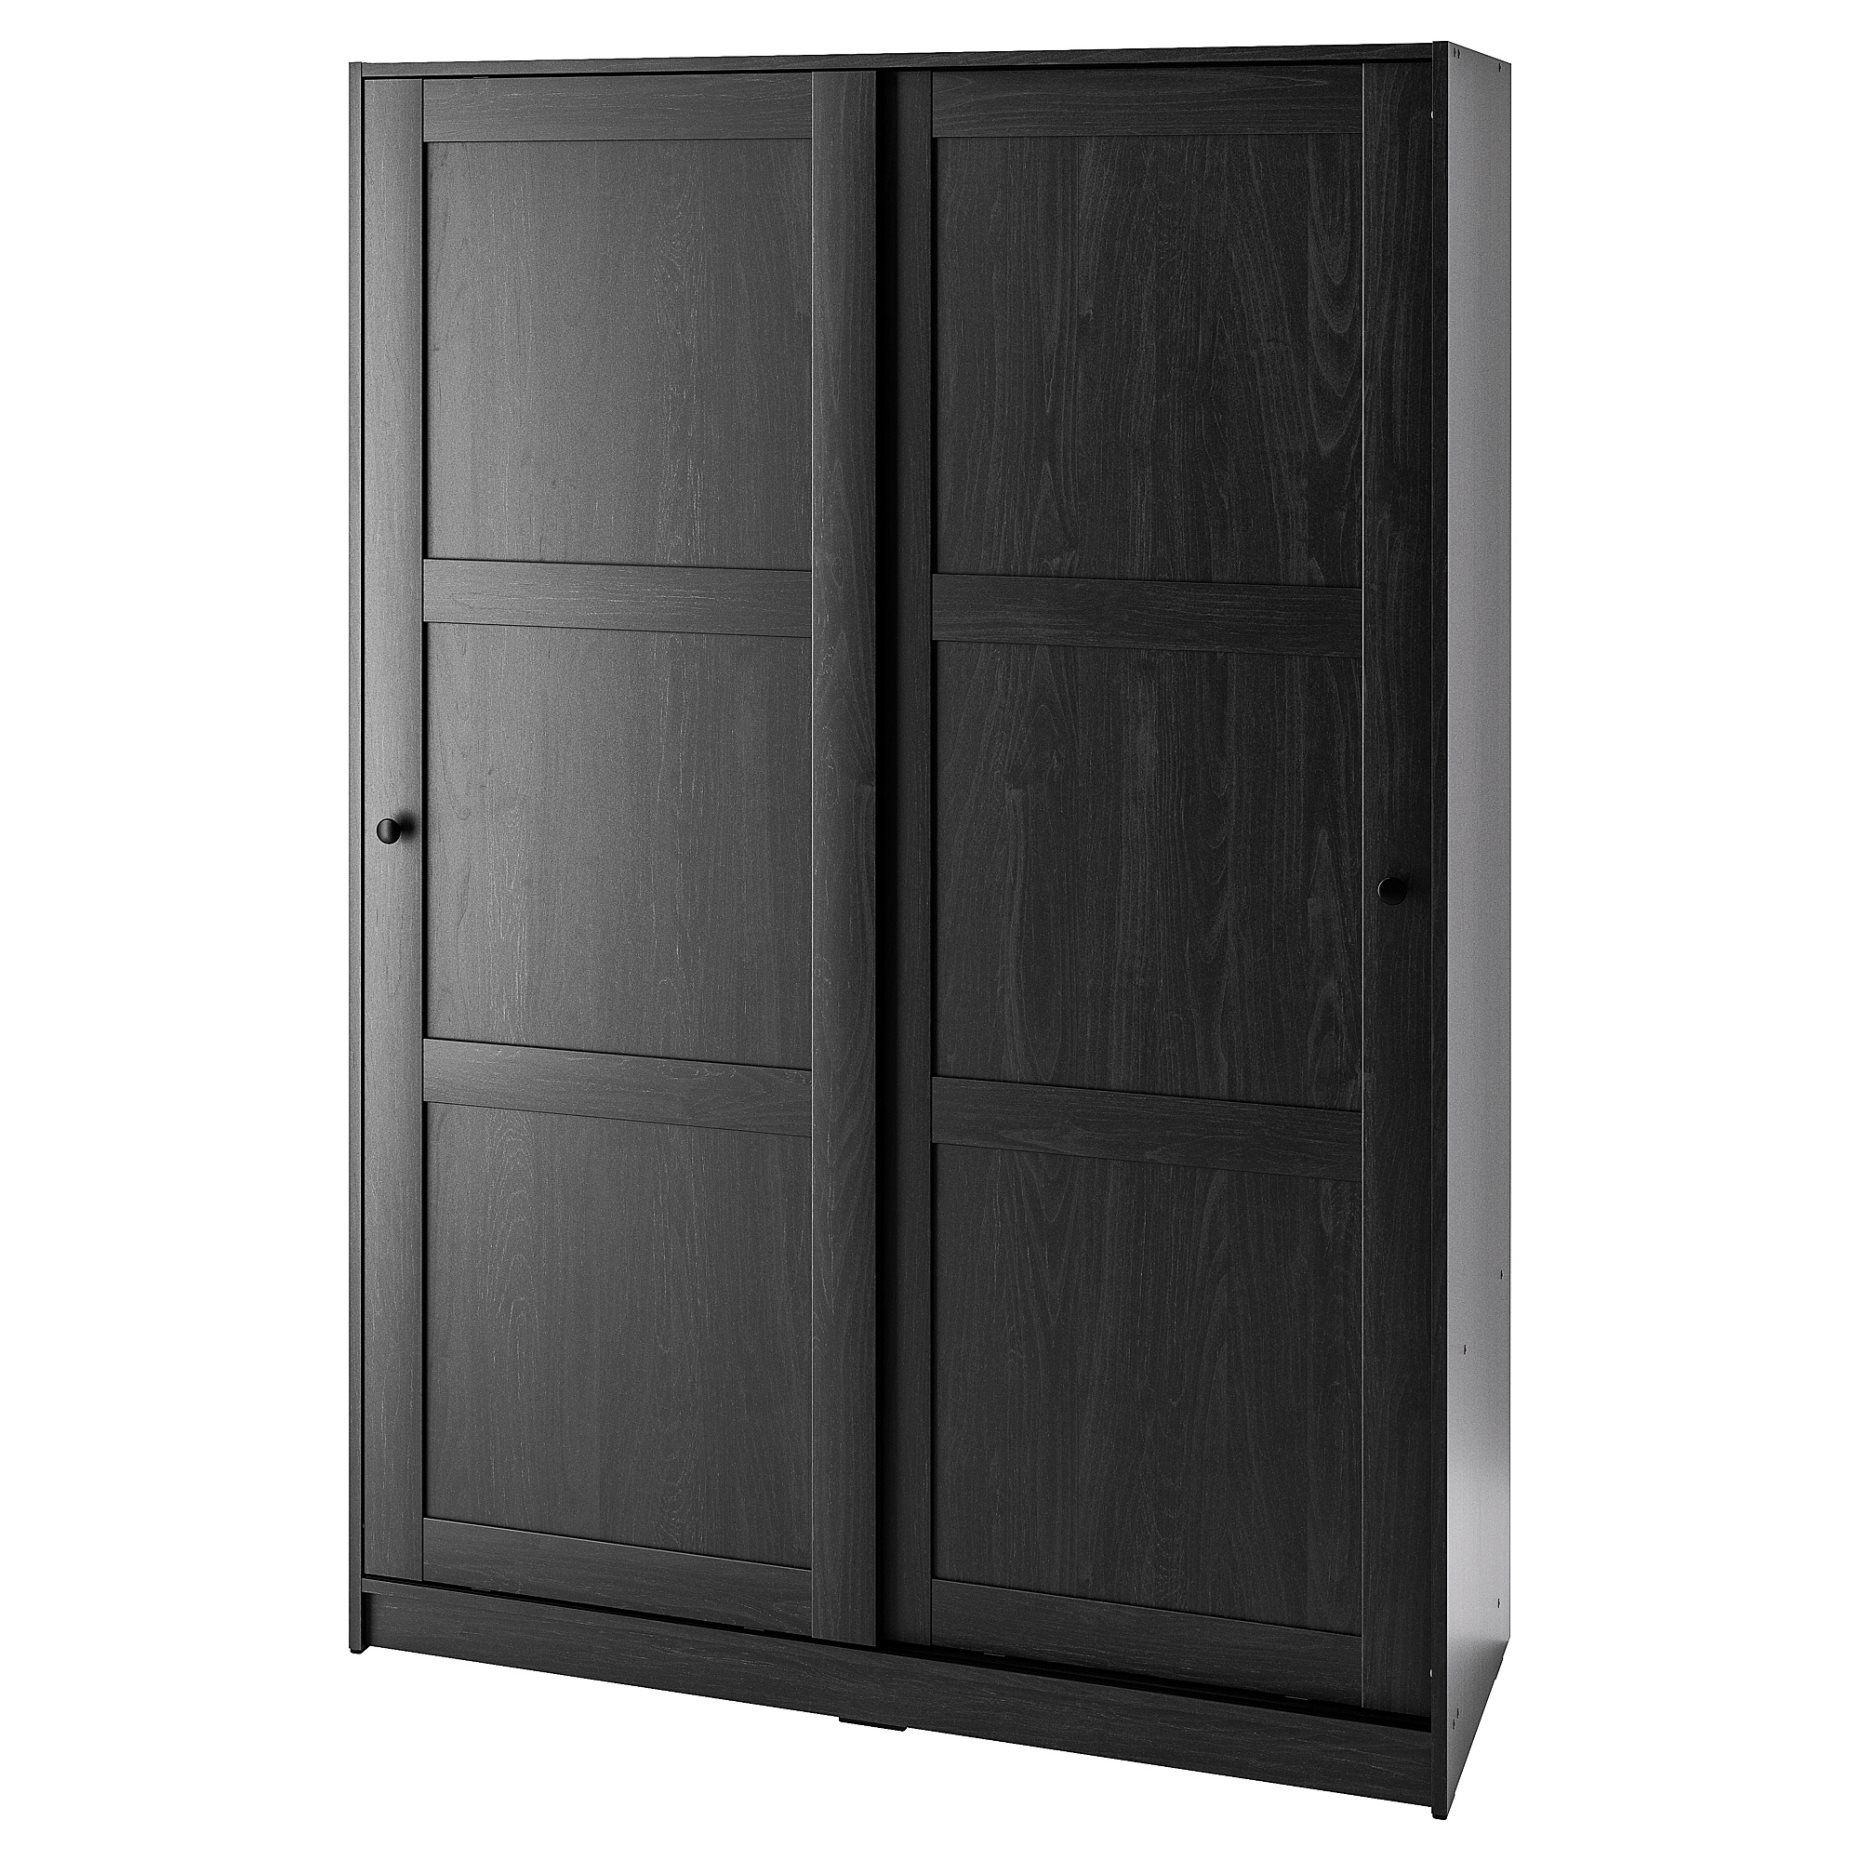 RAKKESTAD, ντουλάπα με συρόμενες πόρτες, 117x176 cm, 604.537.67